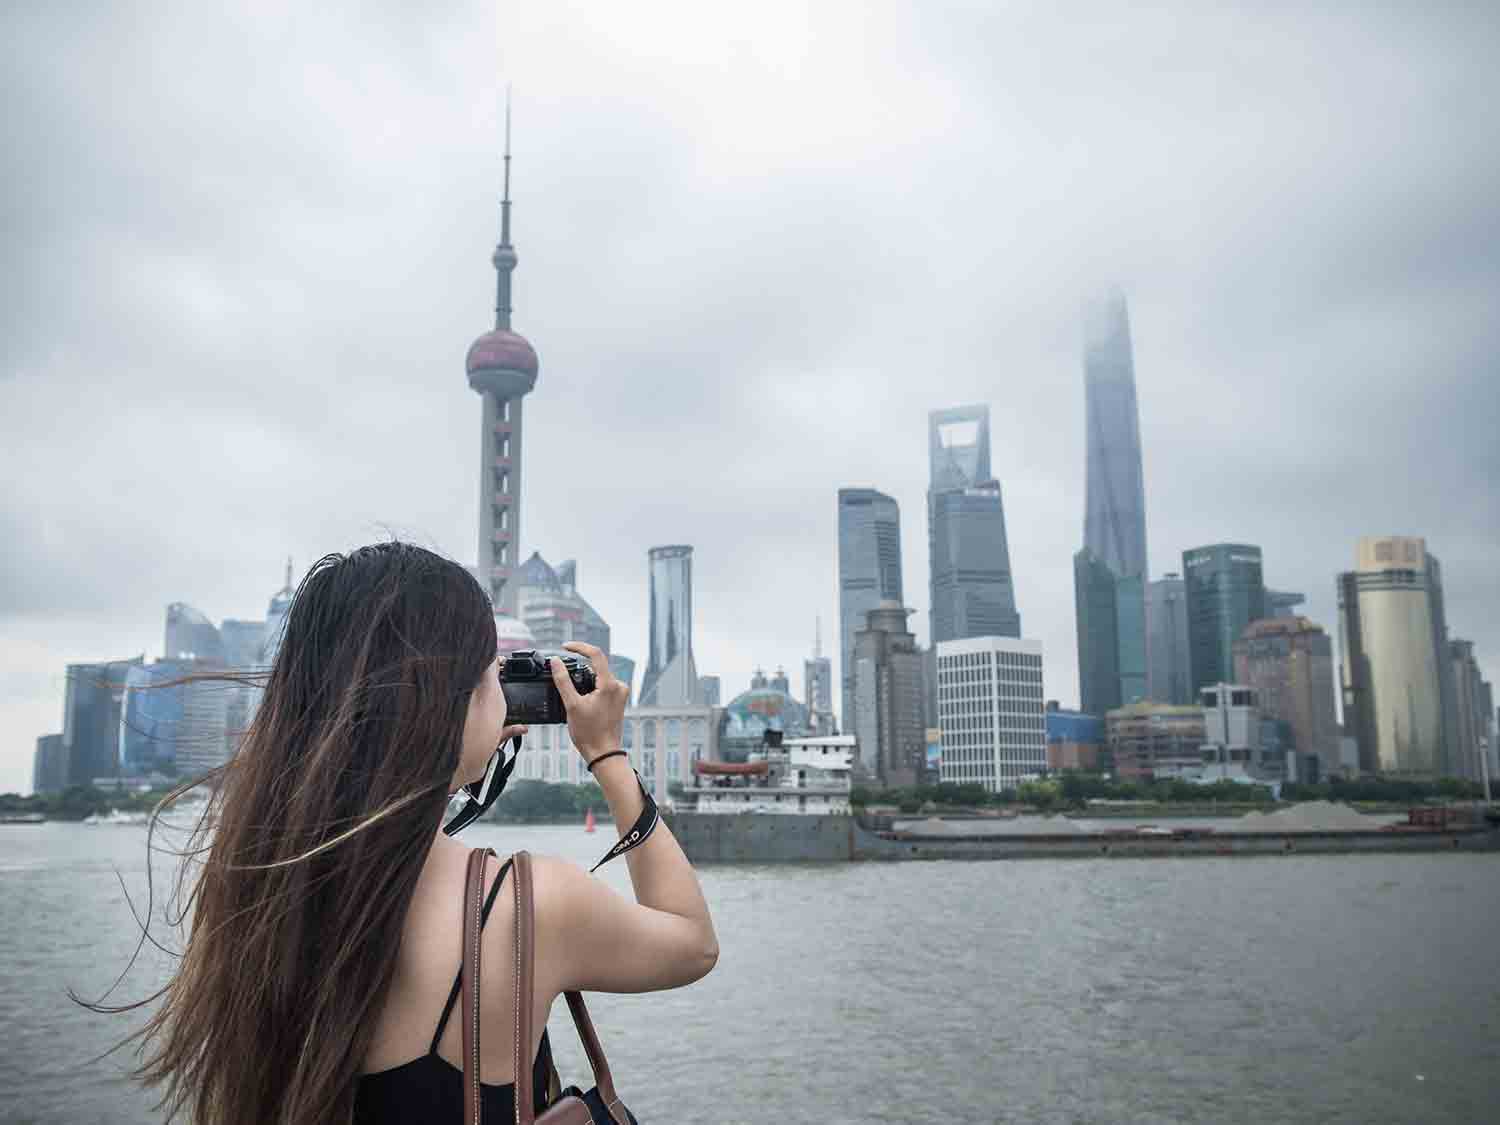 Anna taking a photo of the Shanghai skyline